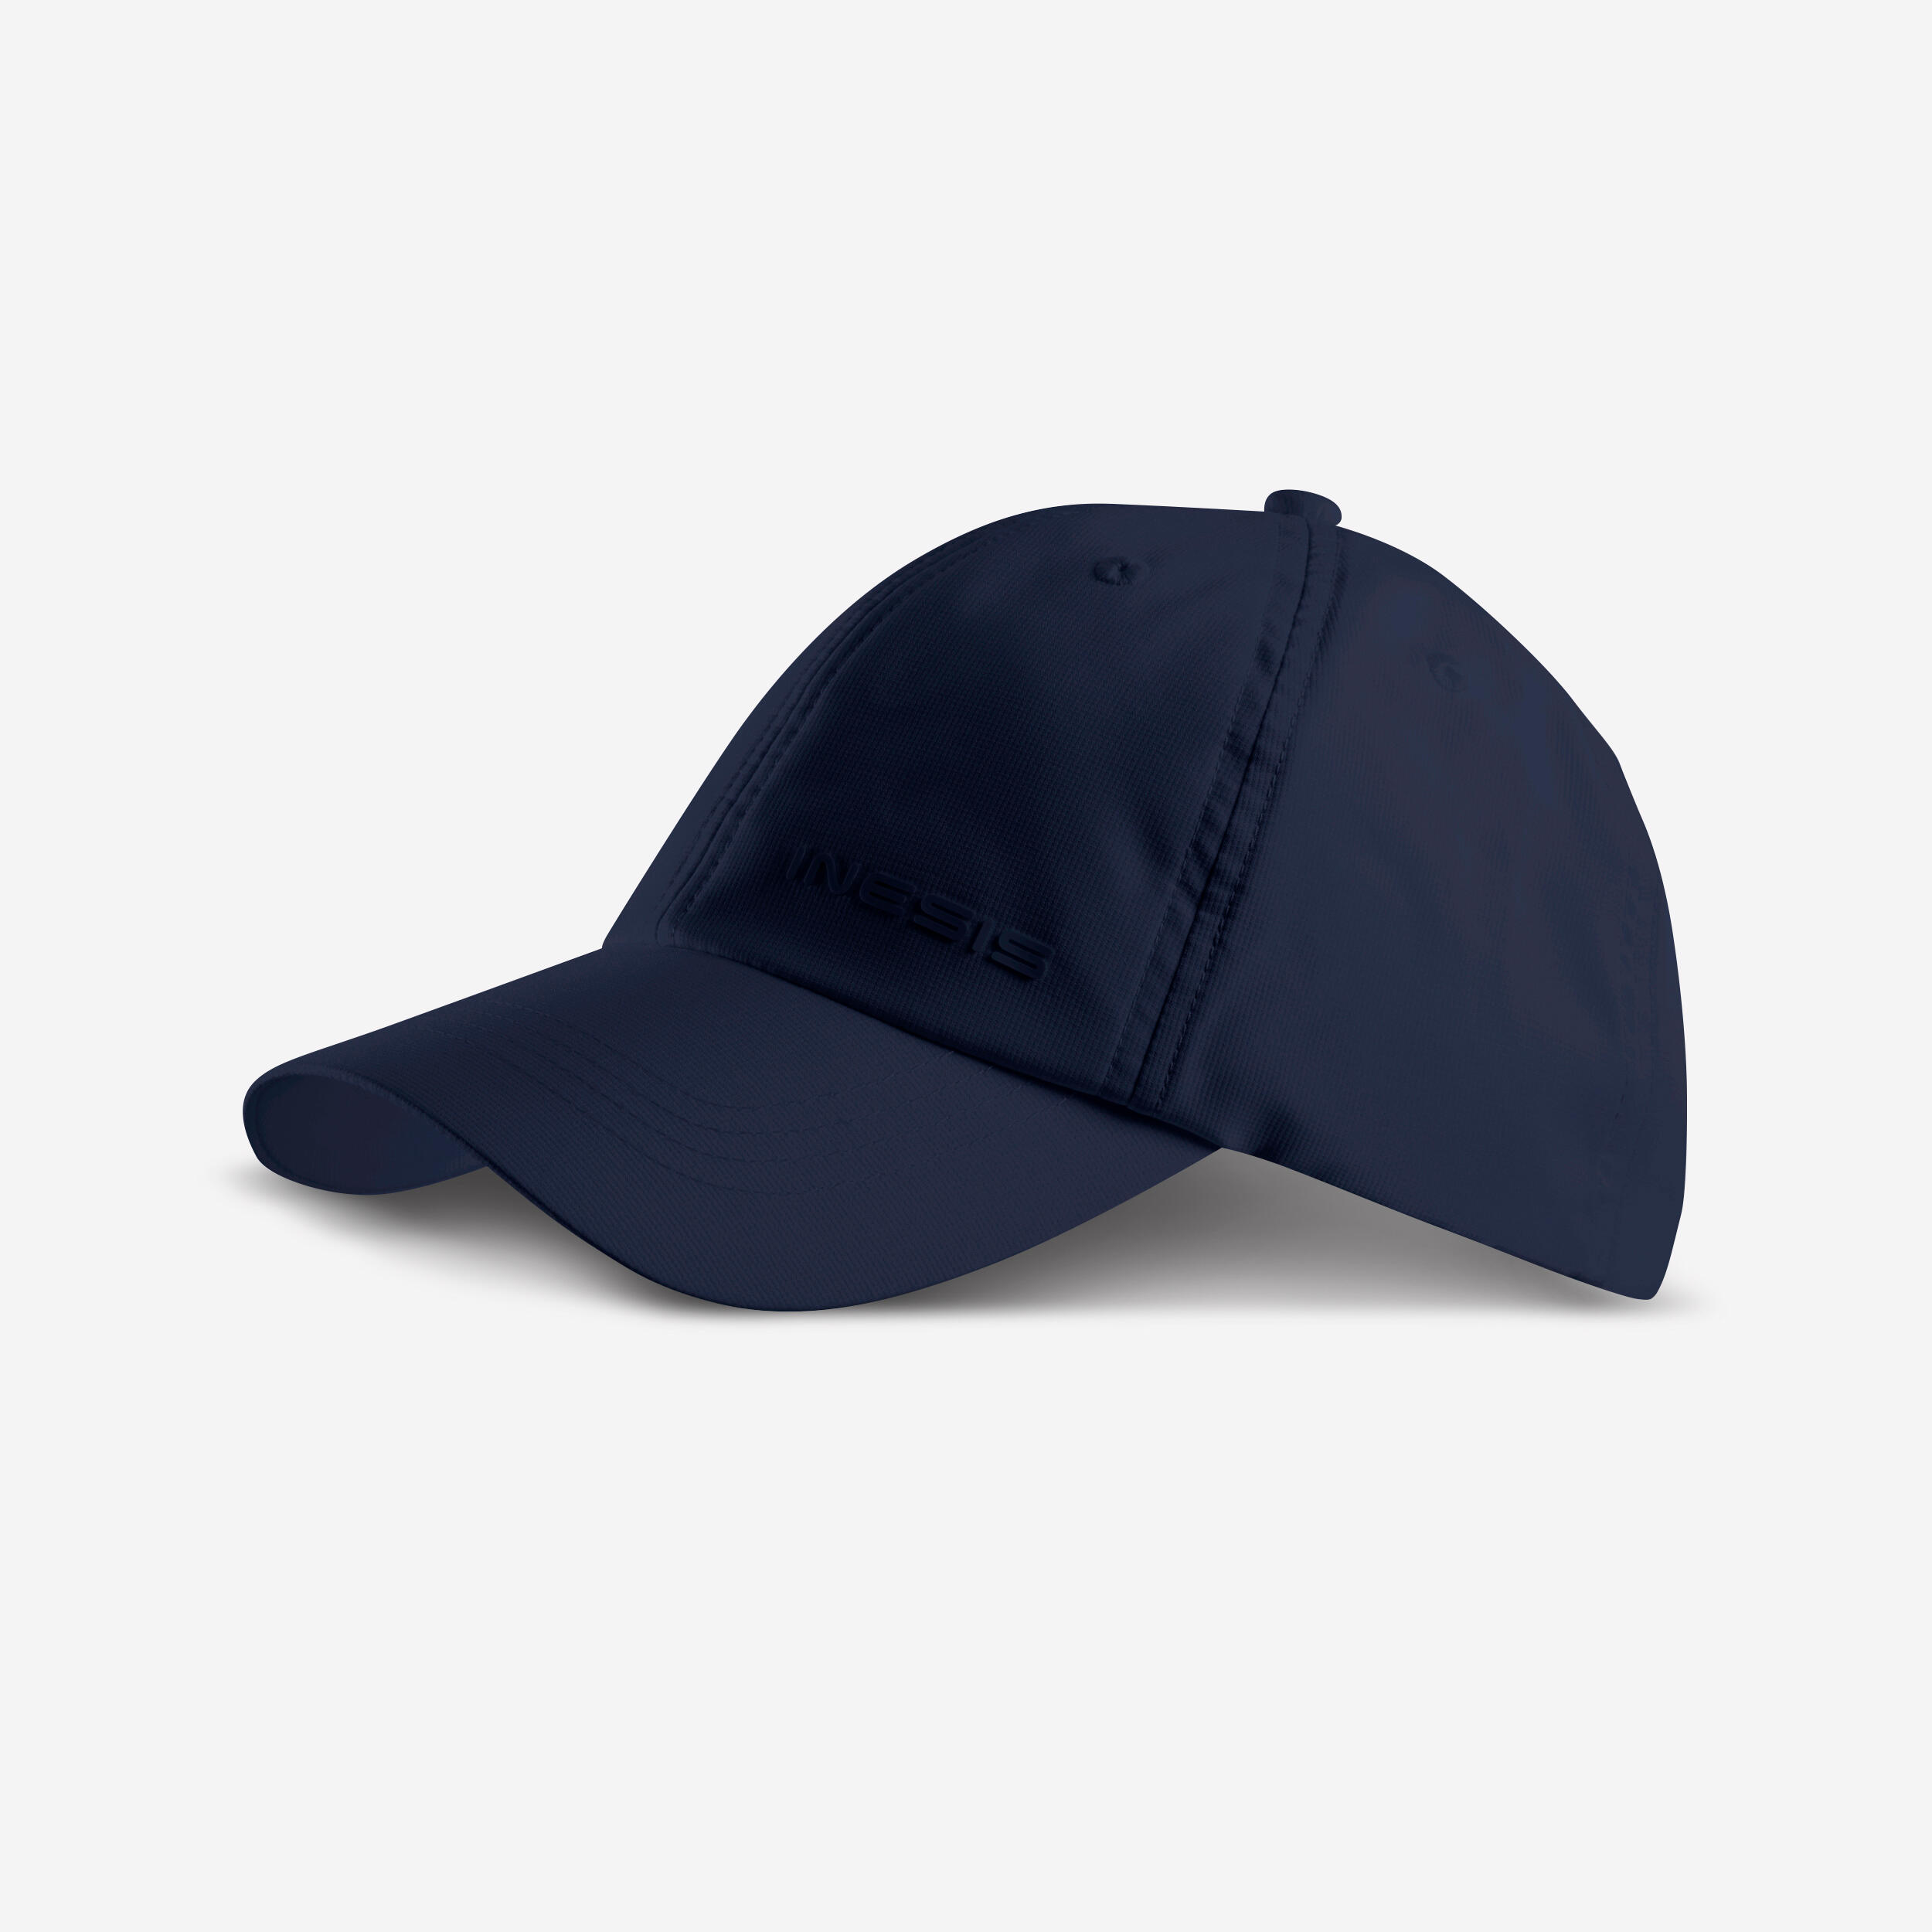 Adult Golf Breathable Cap - Black